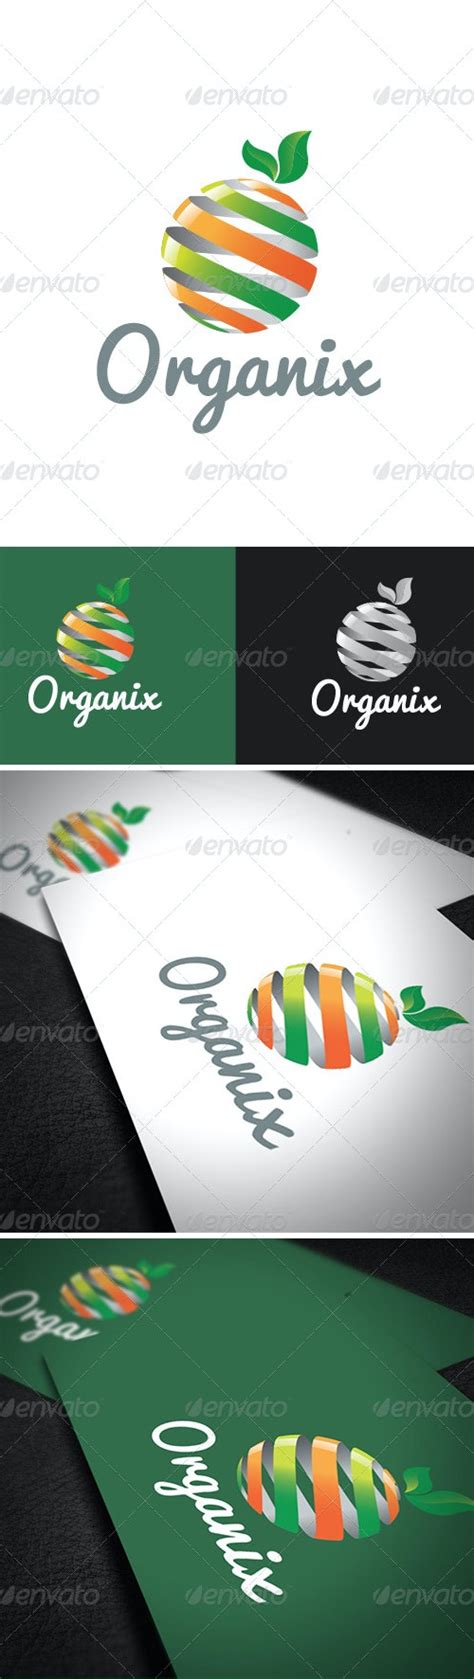 Organix Logo Template By Peregrino96 Graphicriver